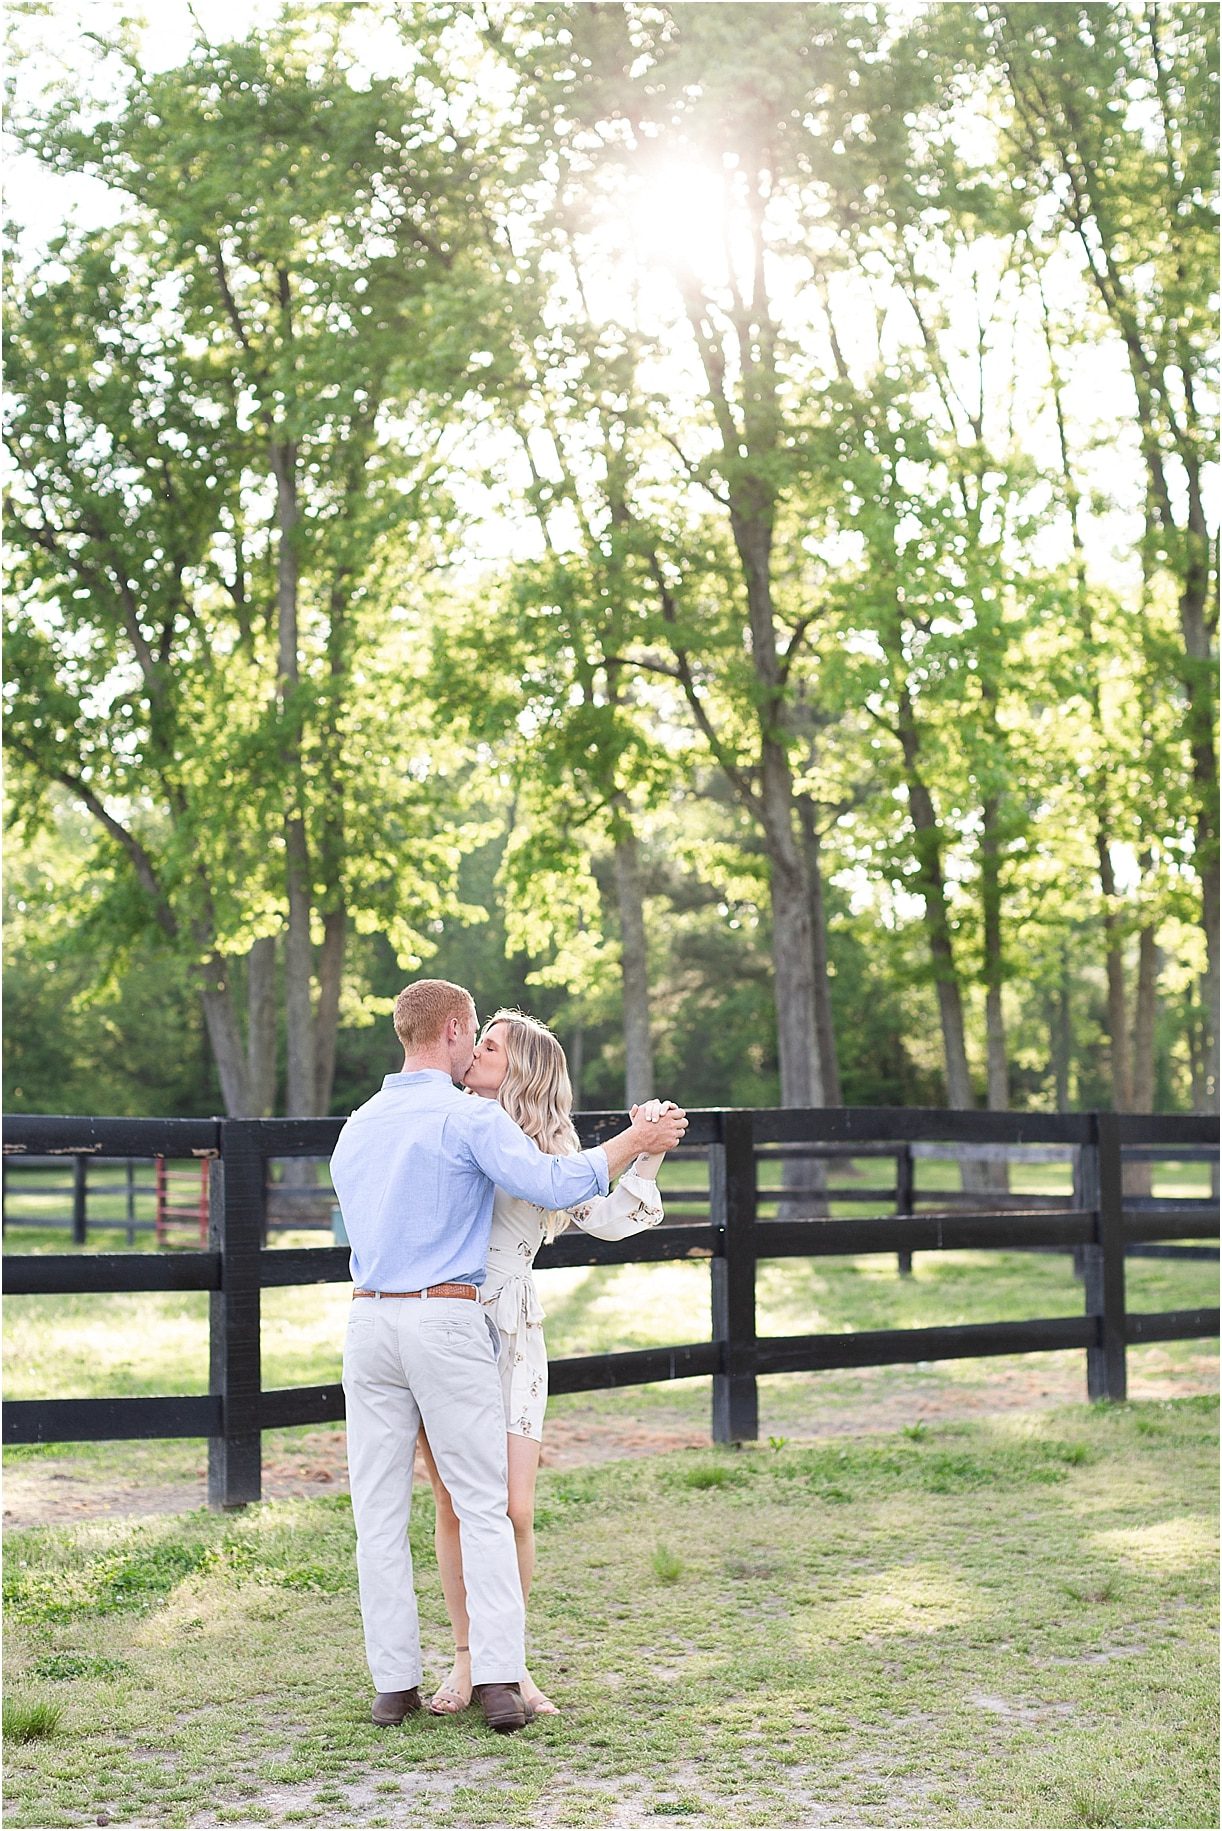 Alturia Farm Virginia Horse Farm Engagement Session | Hill City Bride Virginia Wedding Blog